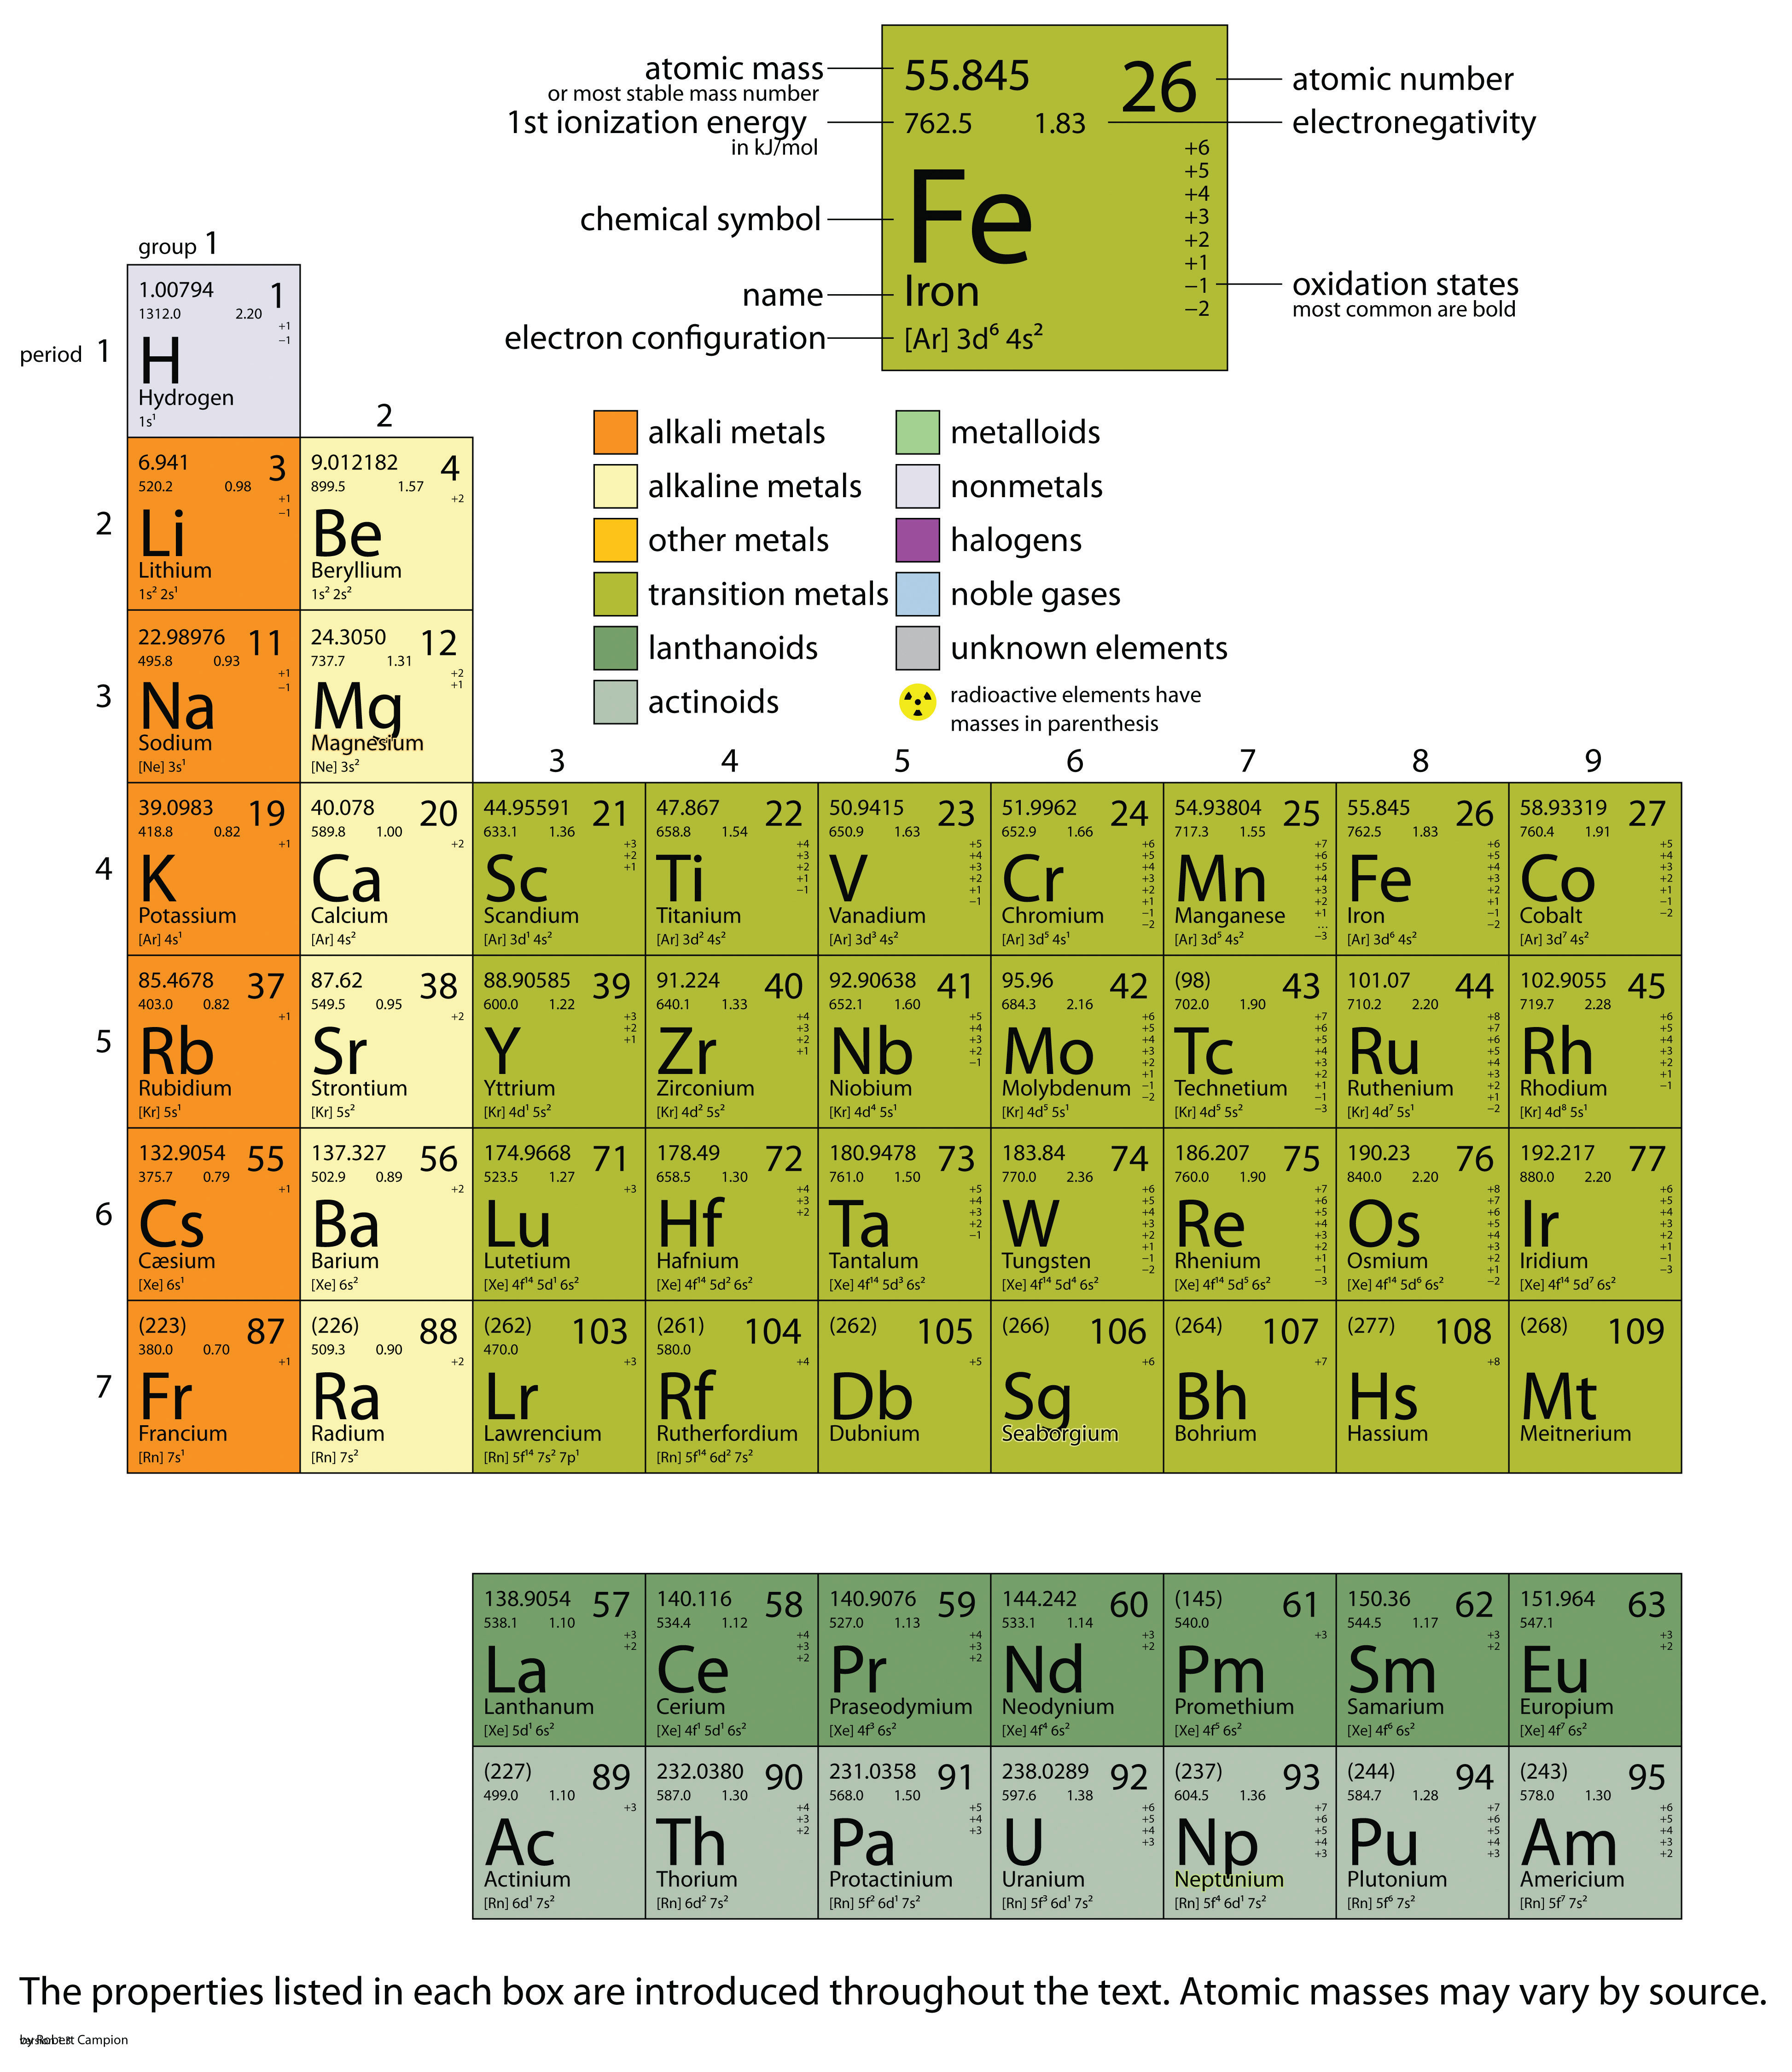 Beryllium atomic mass units